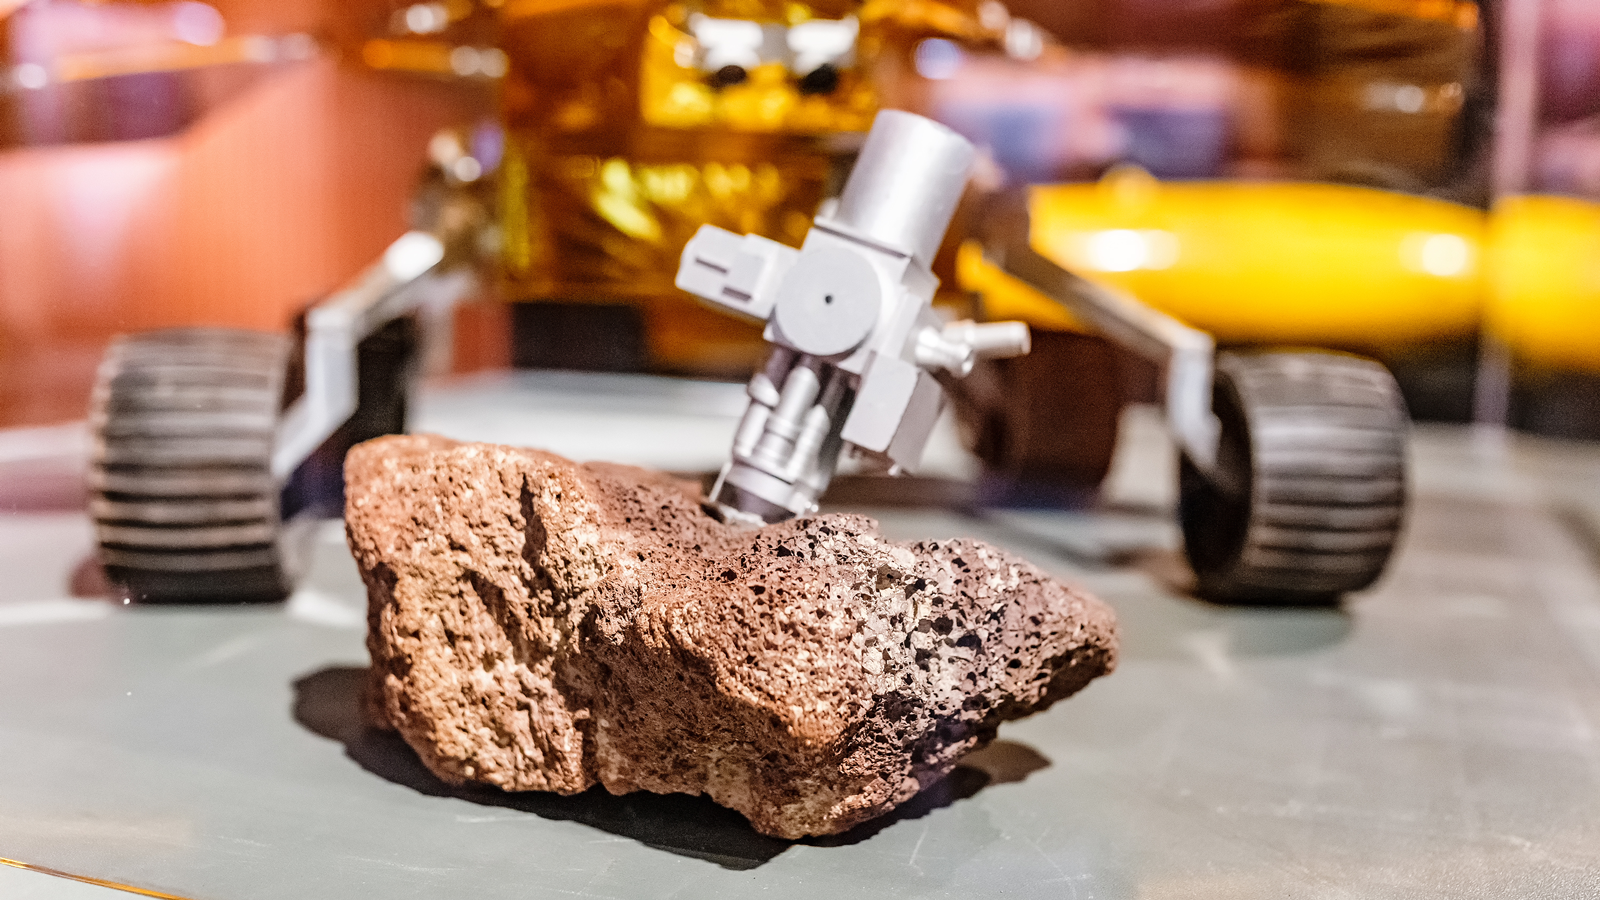 Nasa deems its Mars Sample Return programme ‘too expensive’ and seeks alternatives